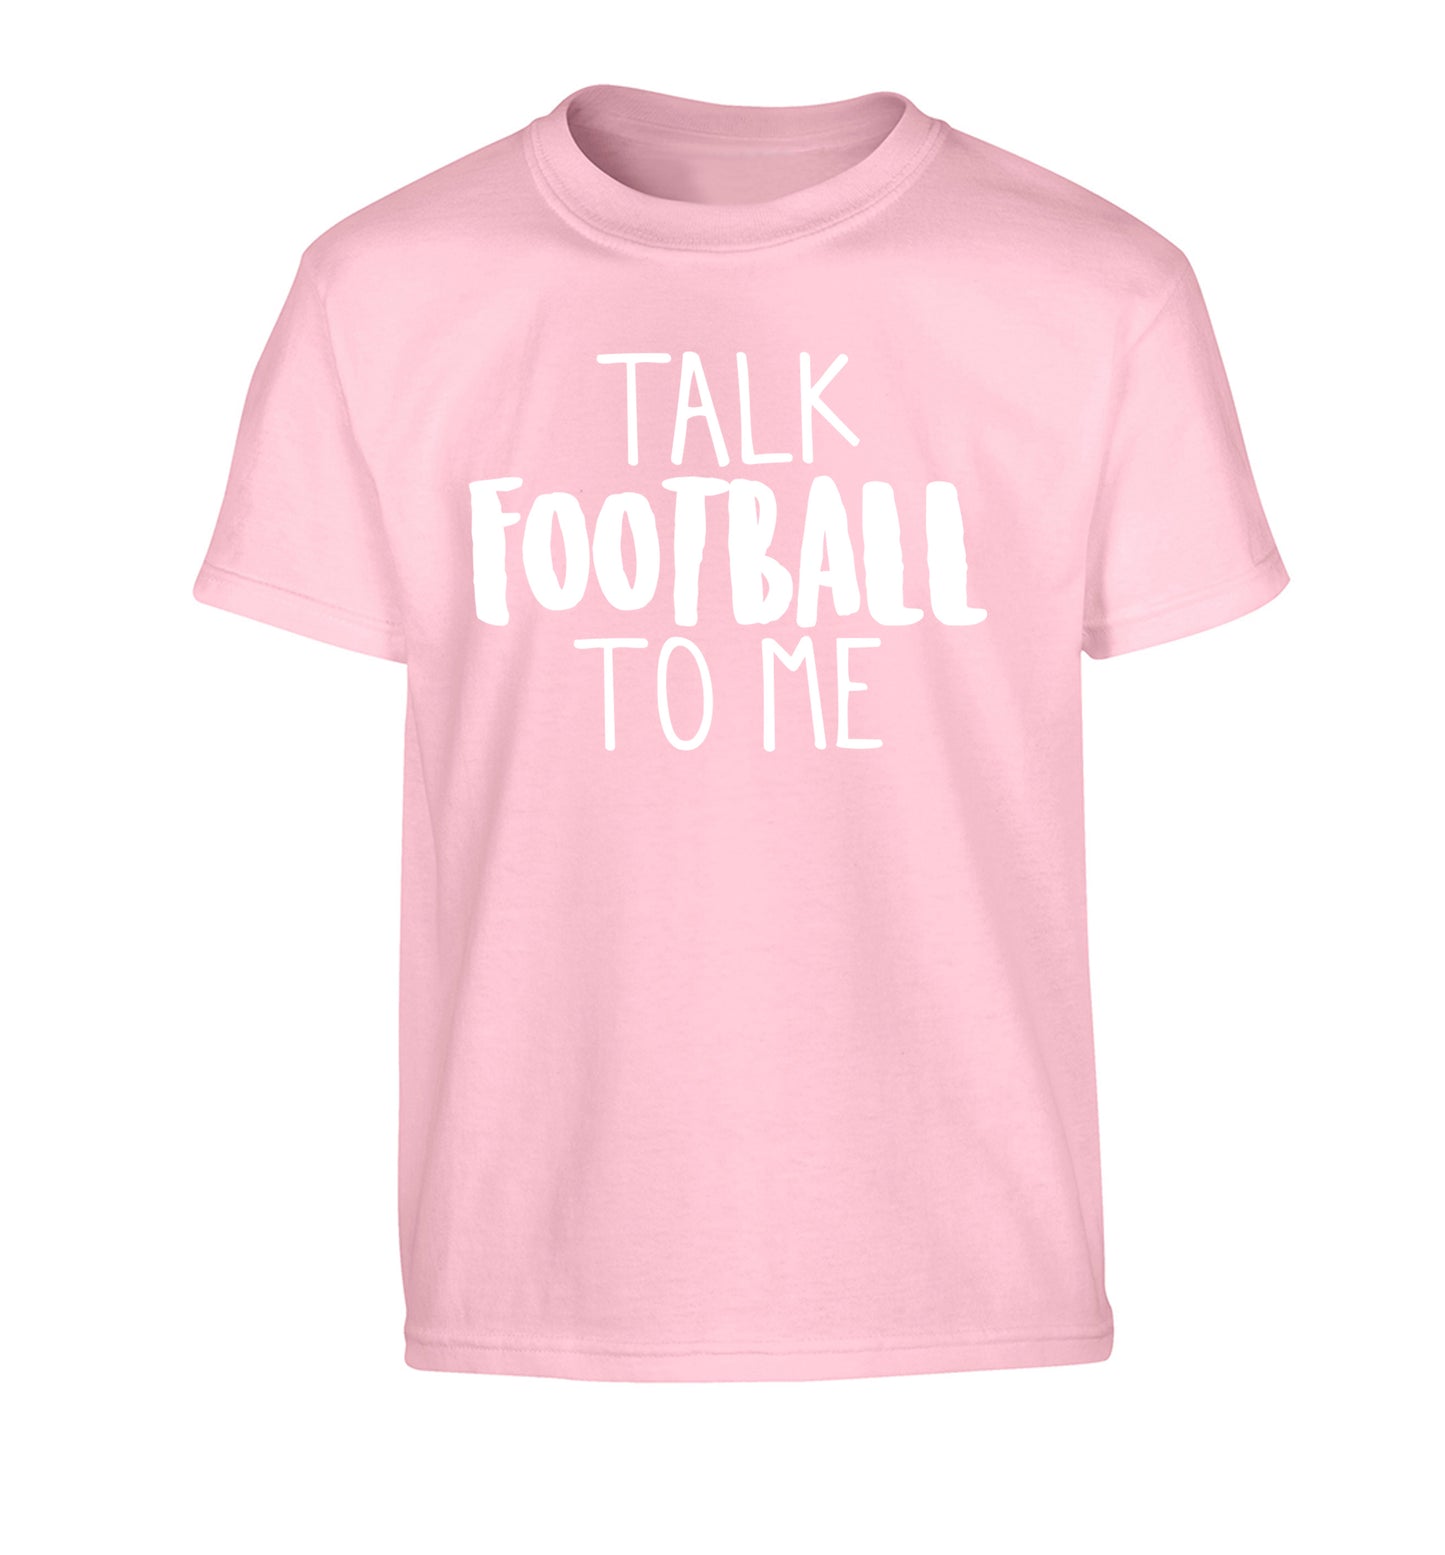 Talk football to me Children's light pink Tshirt 12-14 Years